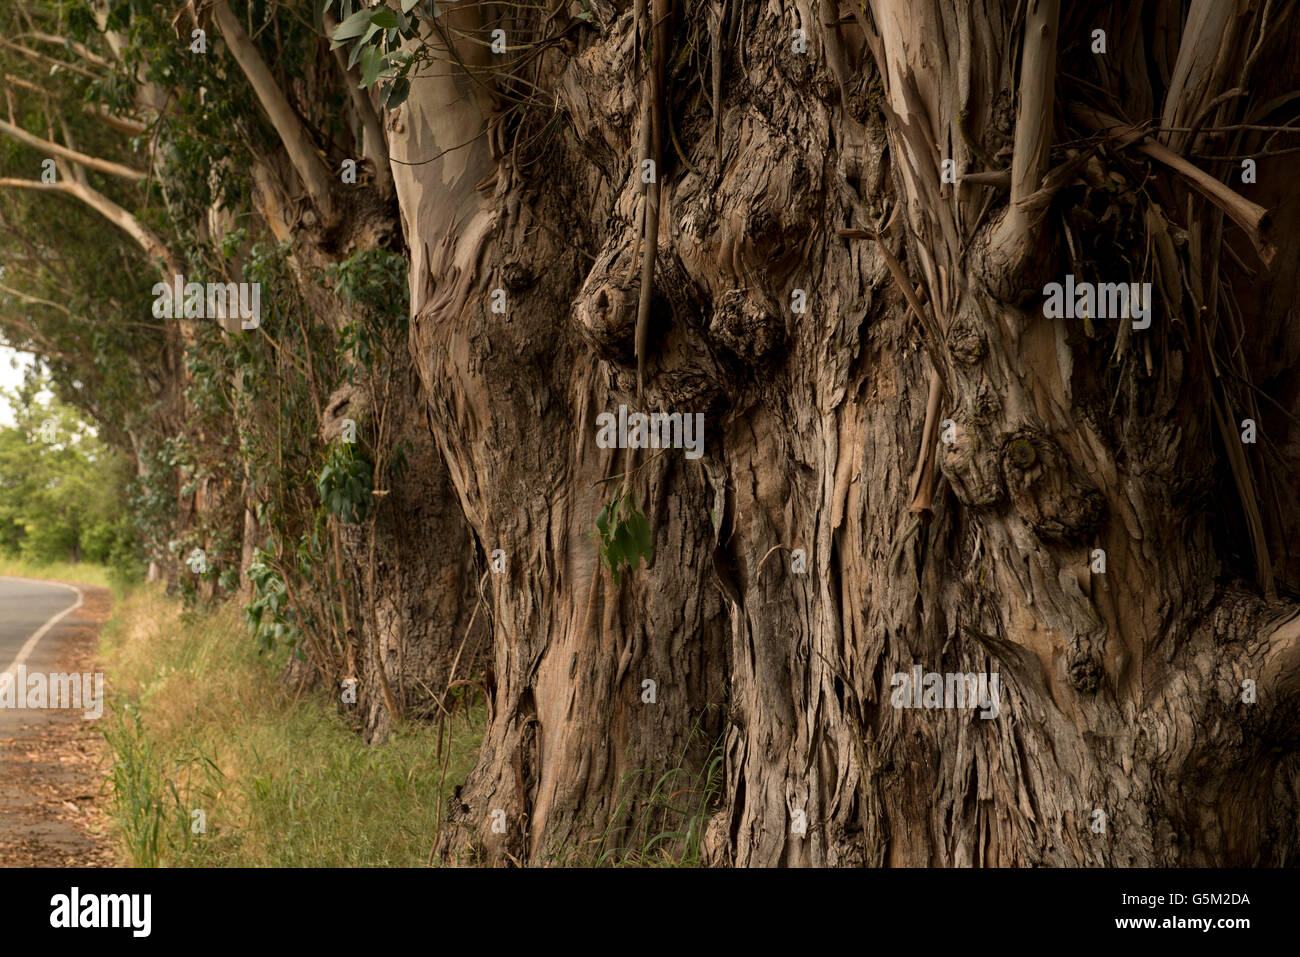 A row of eucalyptus trees at the edge of a road, Napa county, California Stock Photo